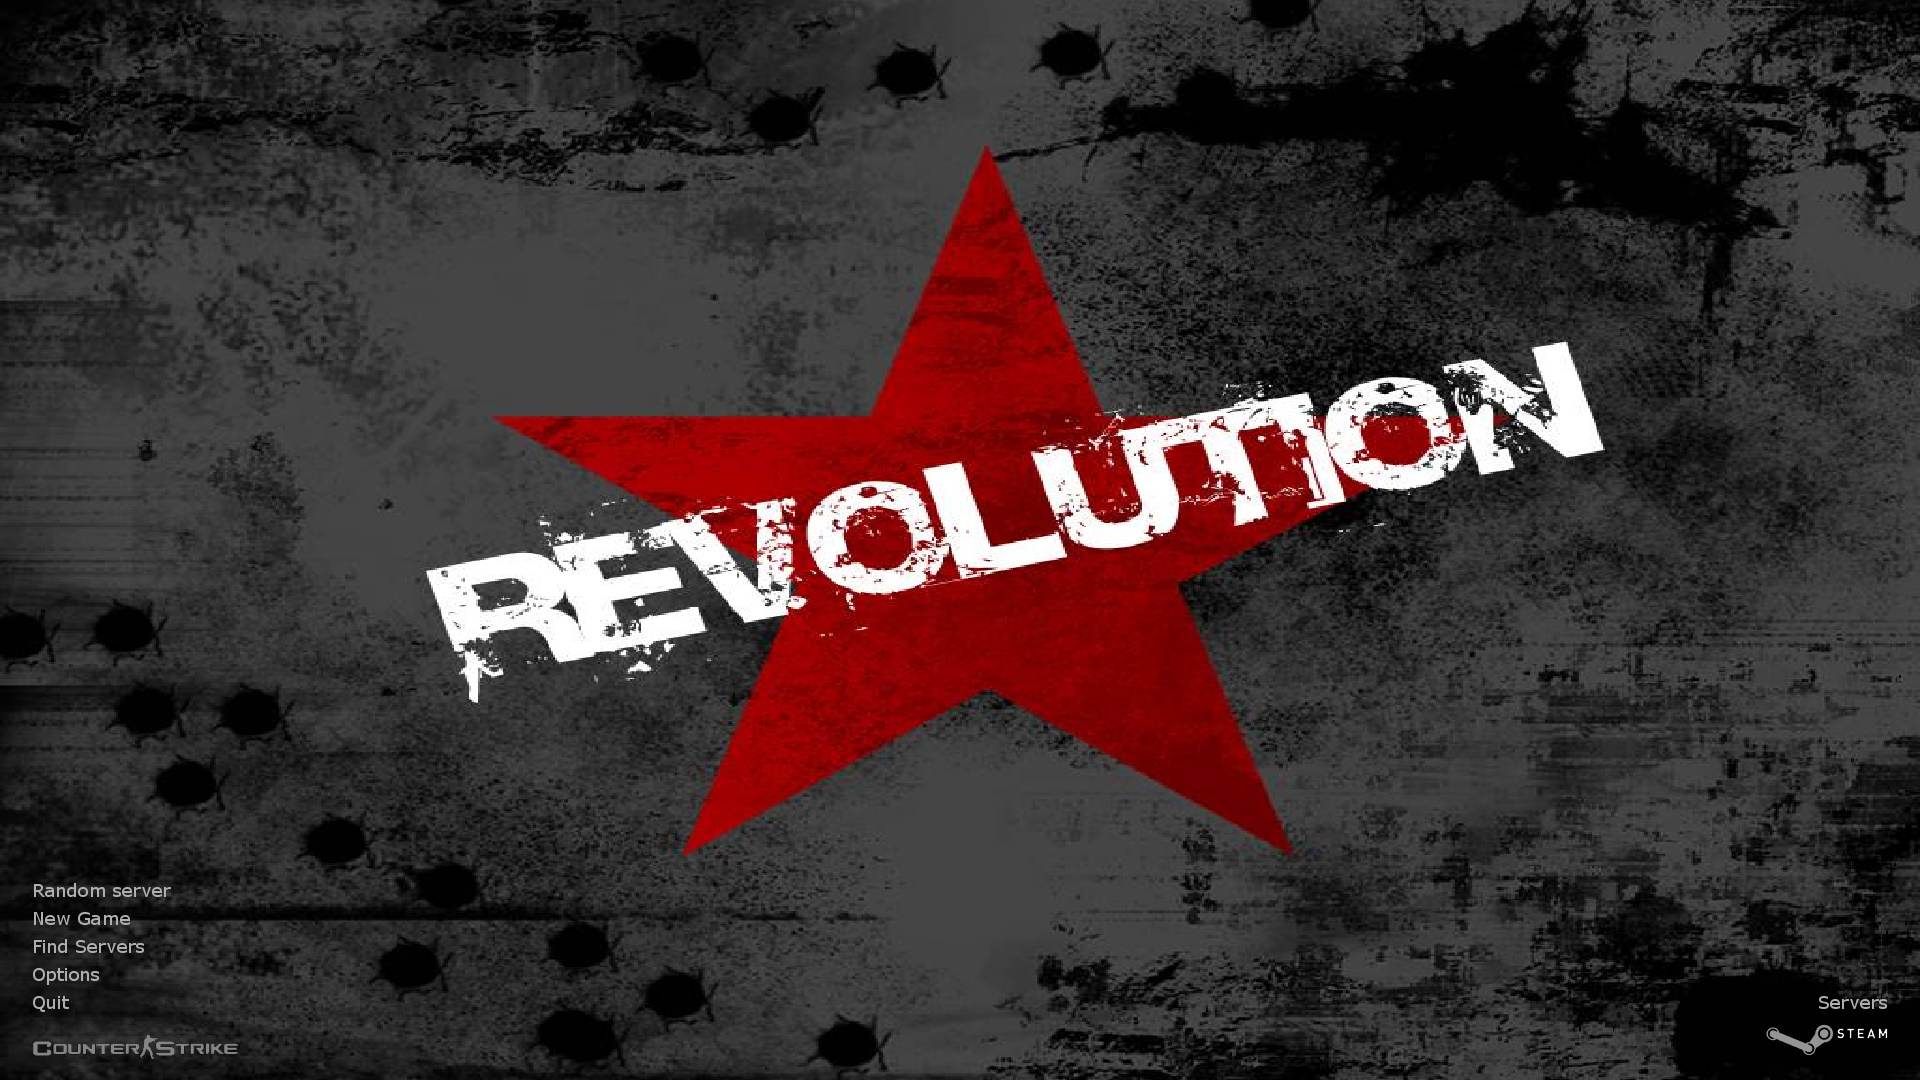 Download CS 1.6 Revolution